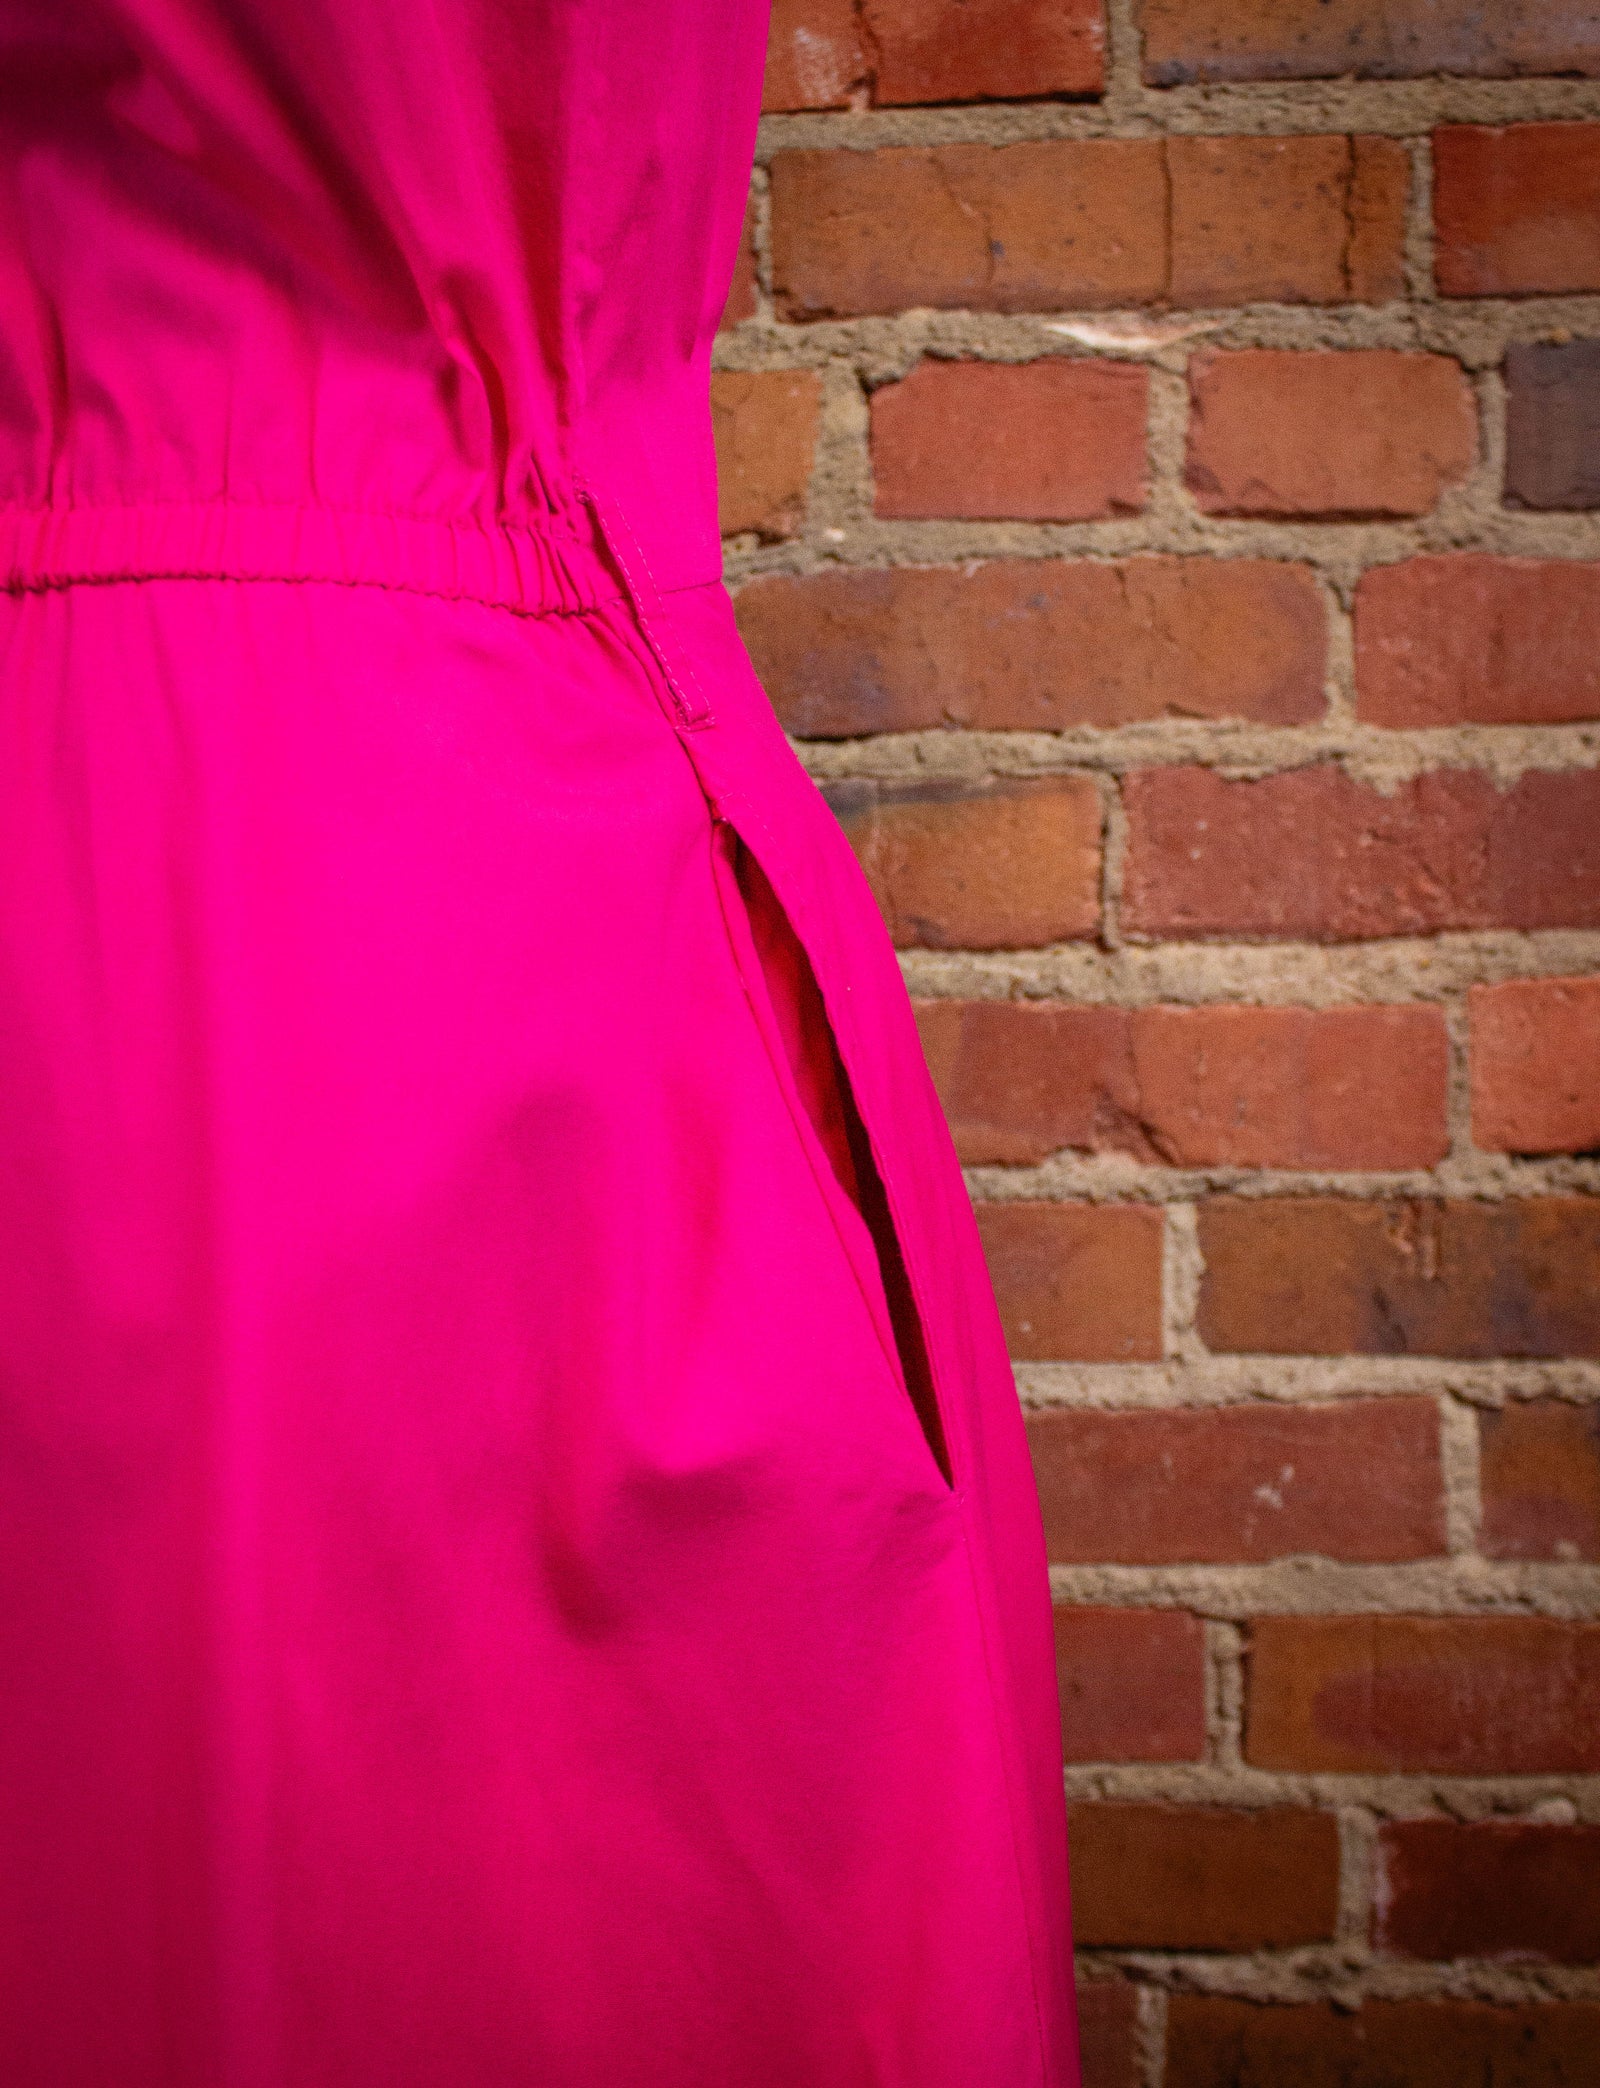 Vintage Pink Button Up Sleeveless Dress 80s Medium